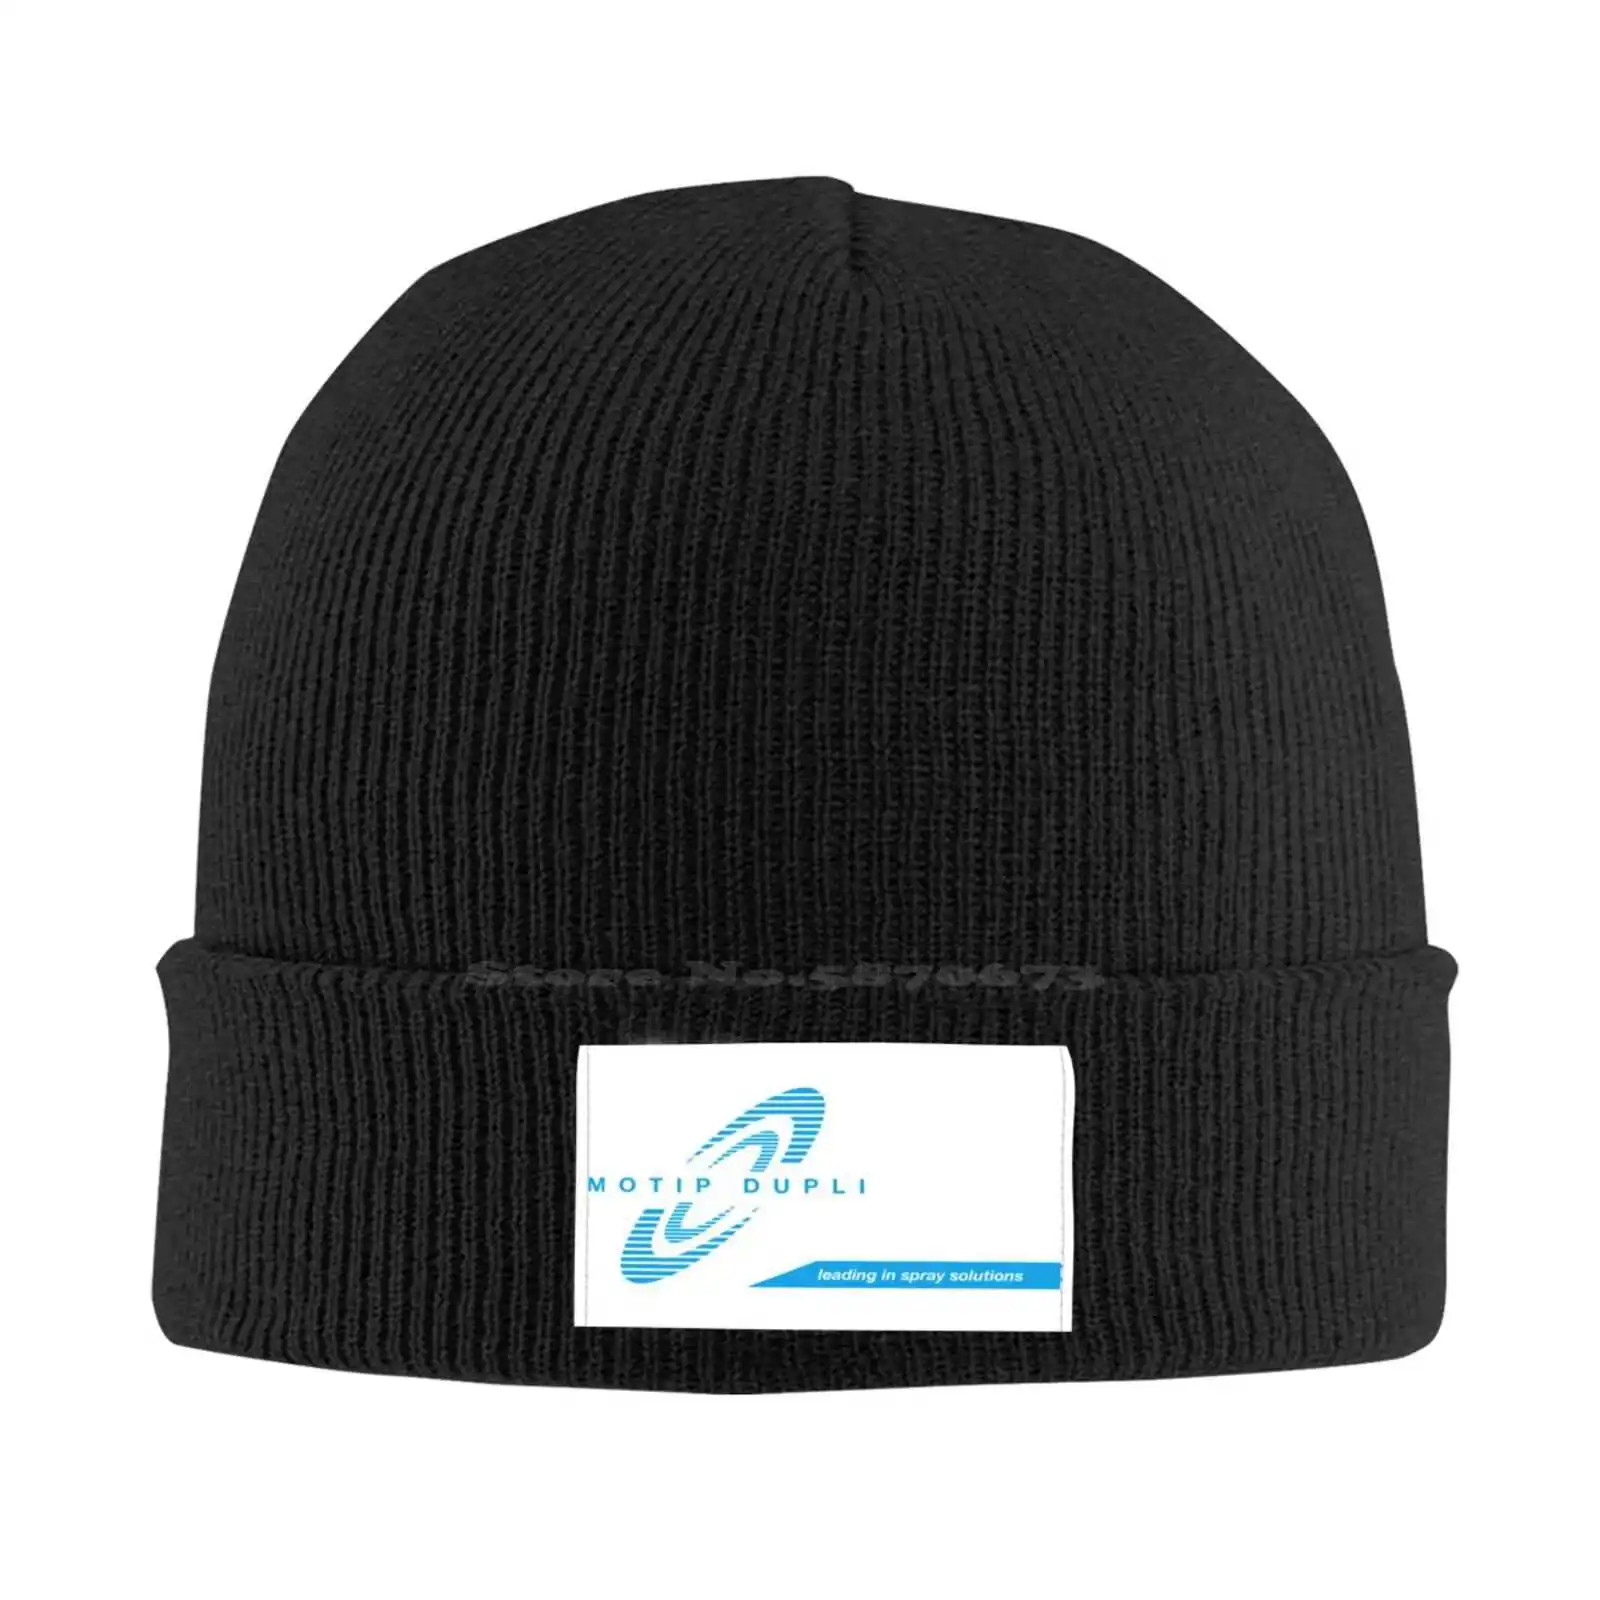 

Motip Dupli Logo Print Graphic Casual cap Baseball cap Knitted hat